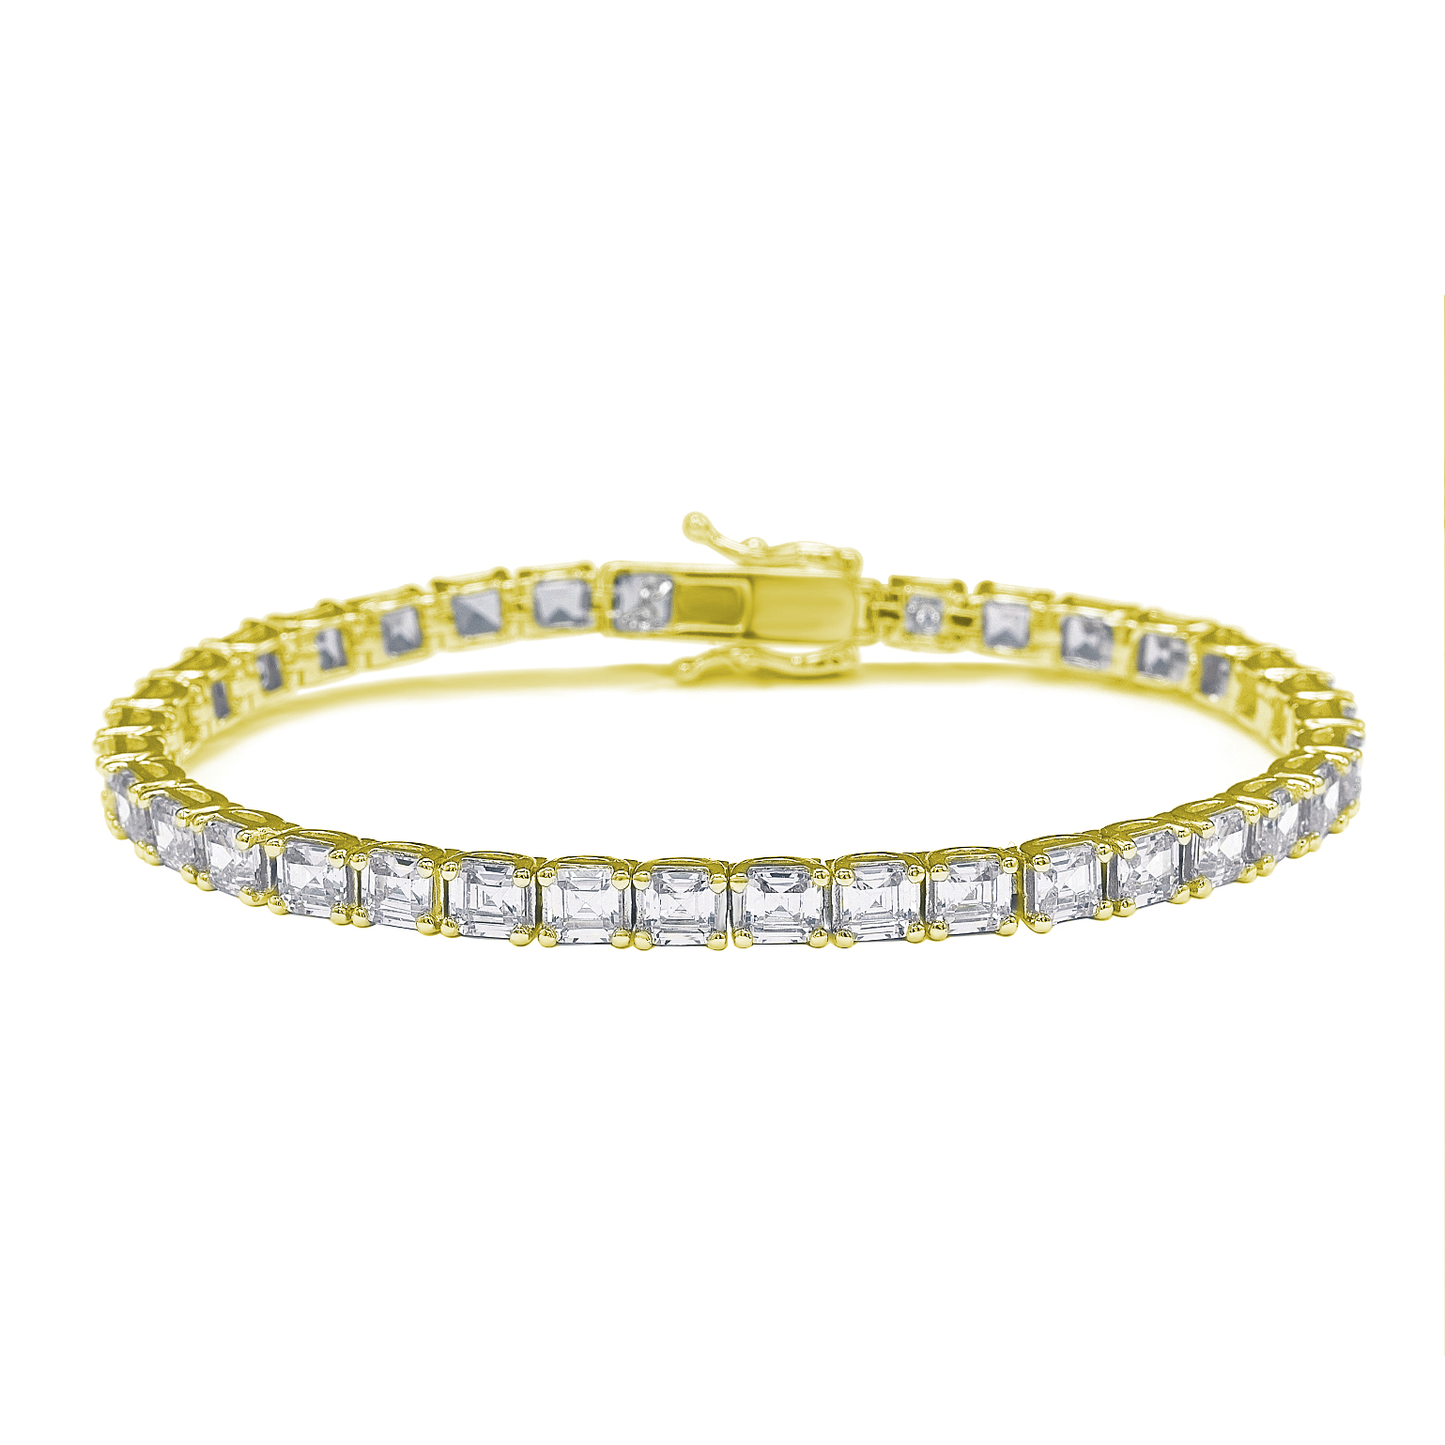 Suzy Levian Golden Sterling Silver White Assher Cut Cubic Zirconia Tennis Bracelet